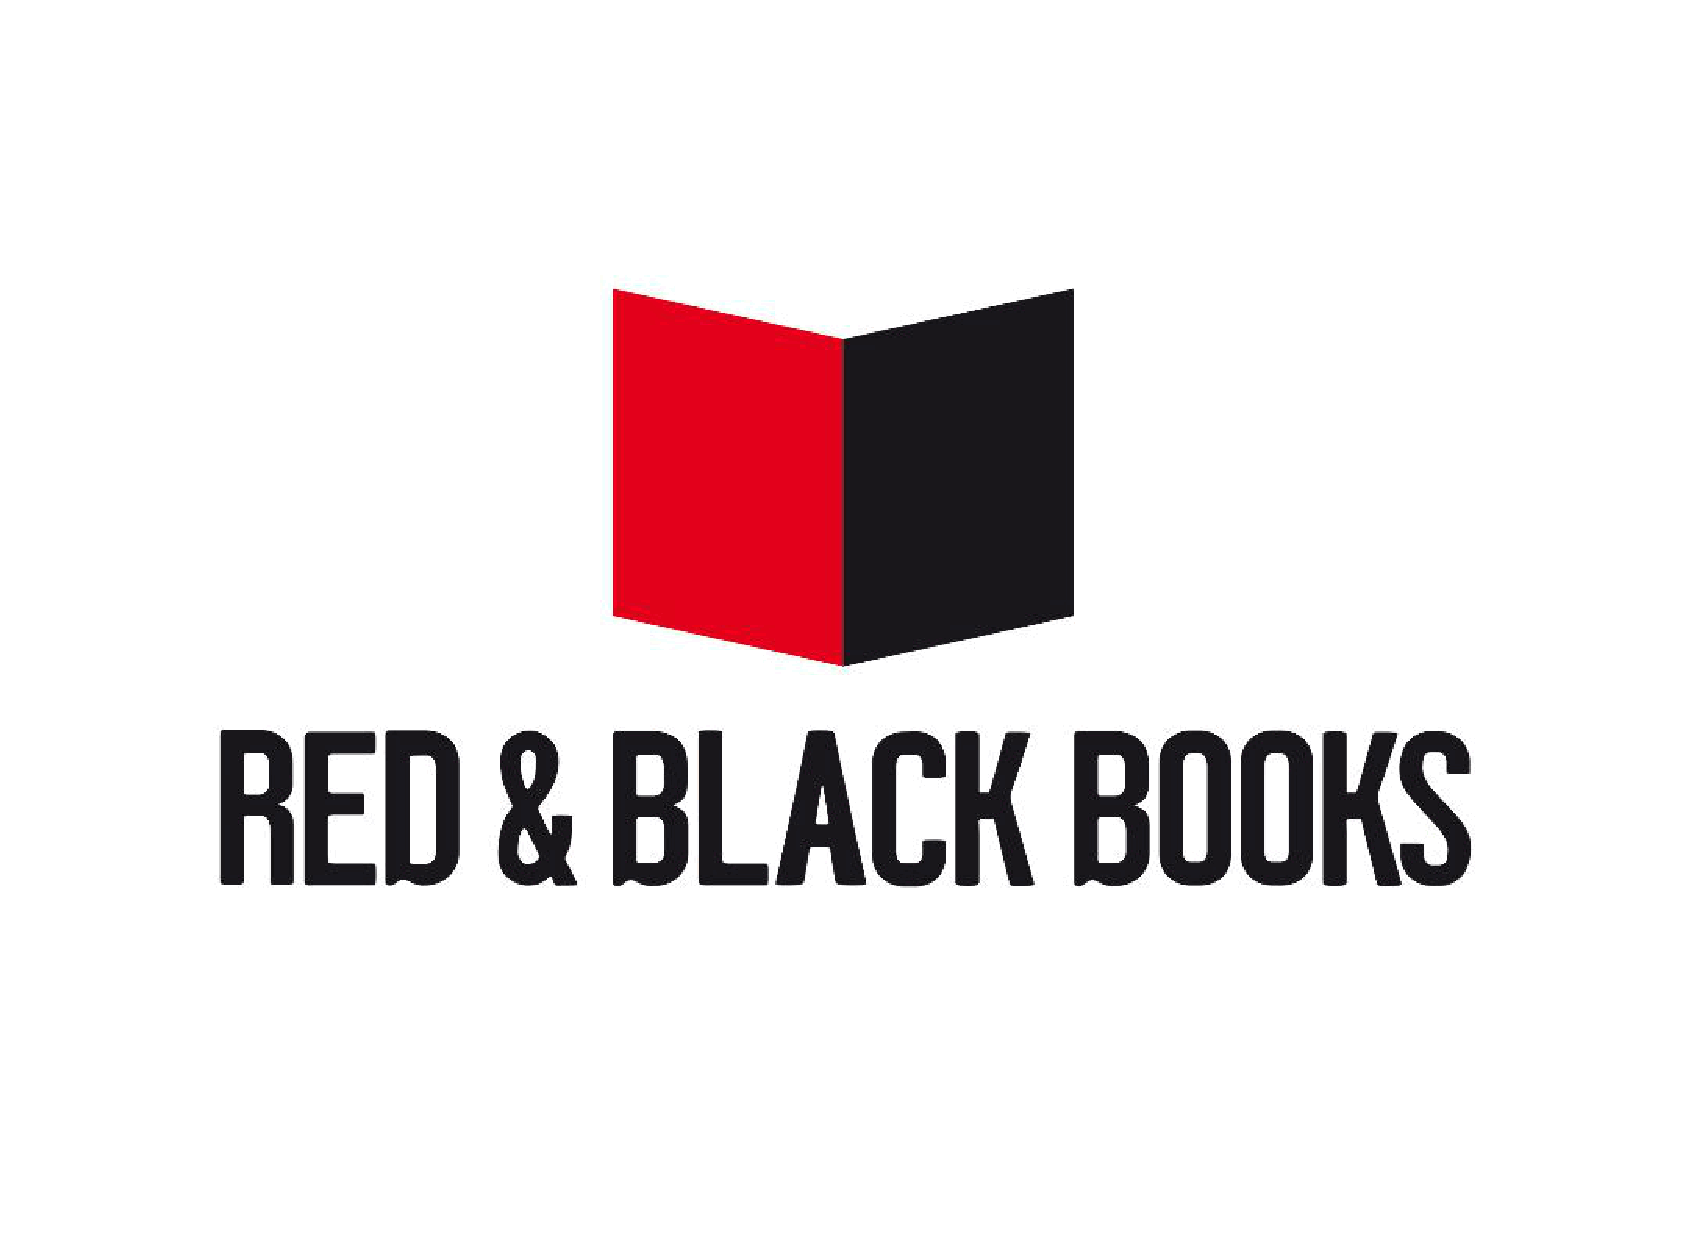 Red & Black Books